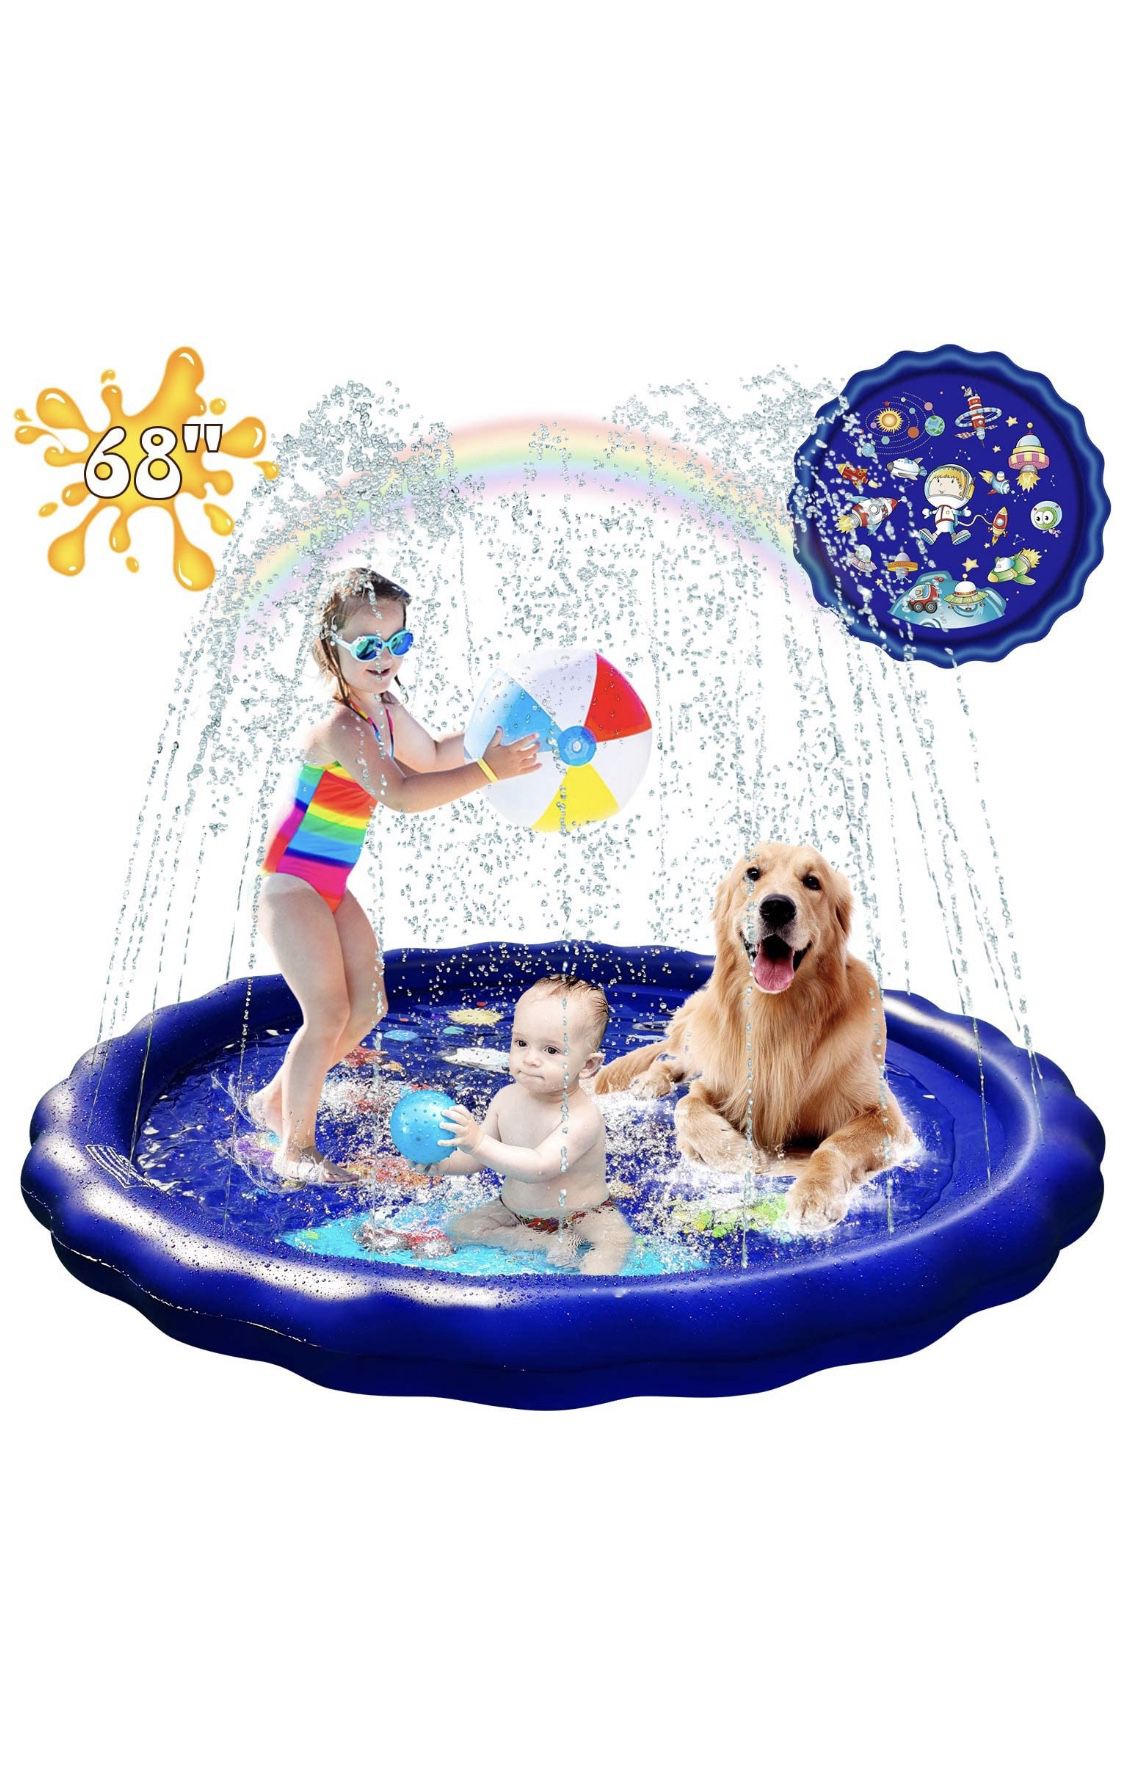 Splash Pad Sprinkler for Kids, 68" Water Toys for Kids Outdoor Sprinklers for Yard.Kids Baby Pool Outdoor Swimming Pool for Kids 1-12 Year Old Boys